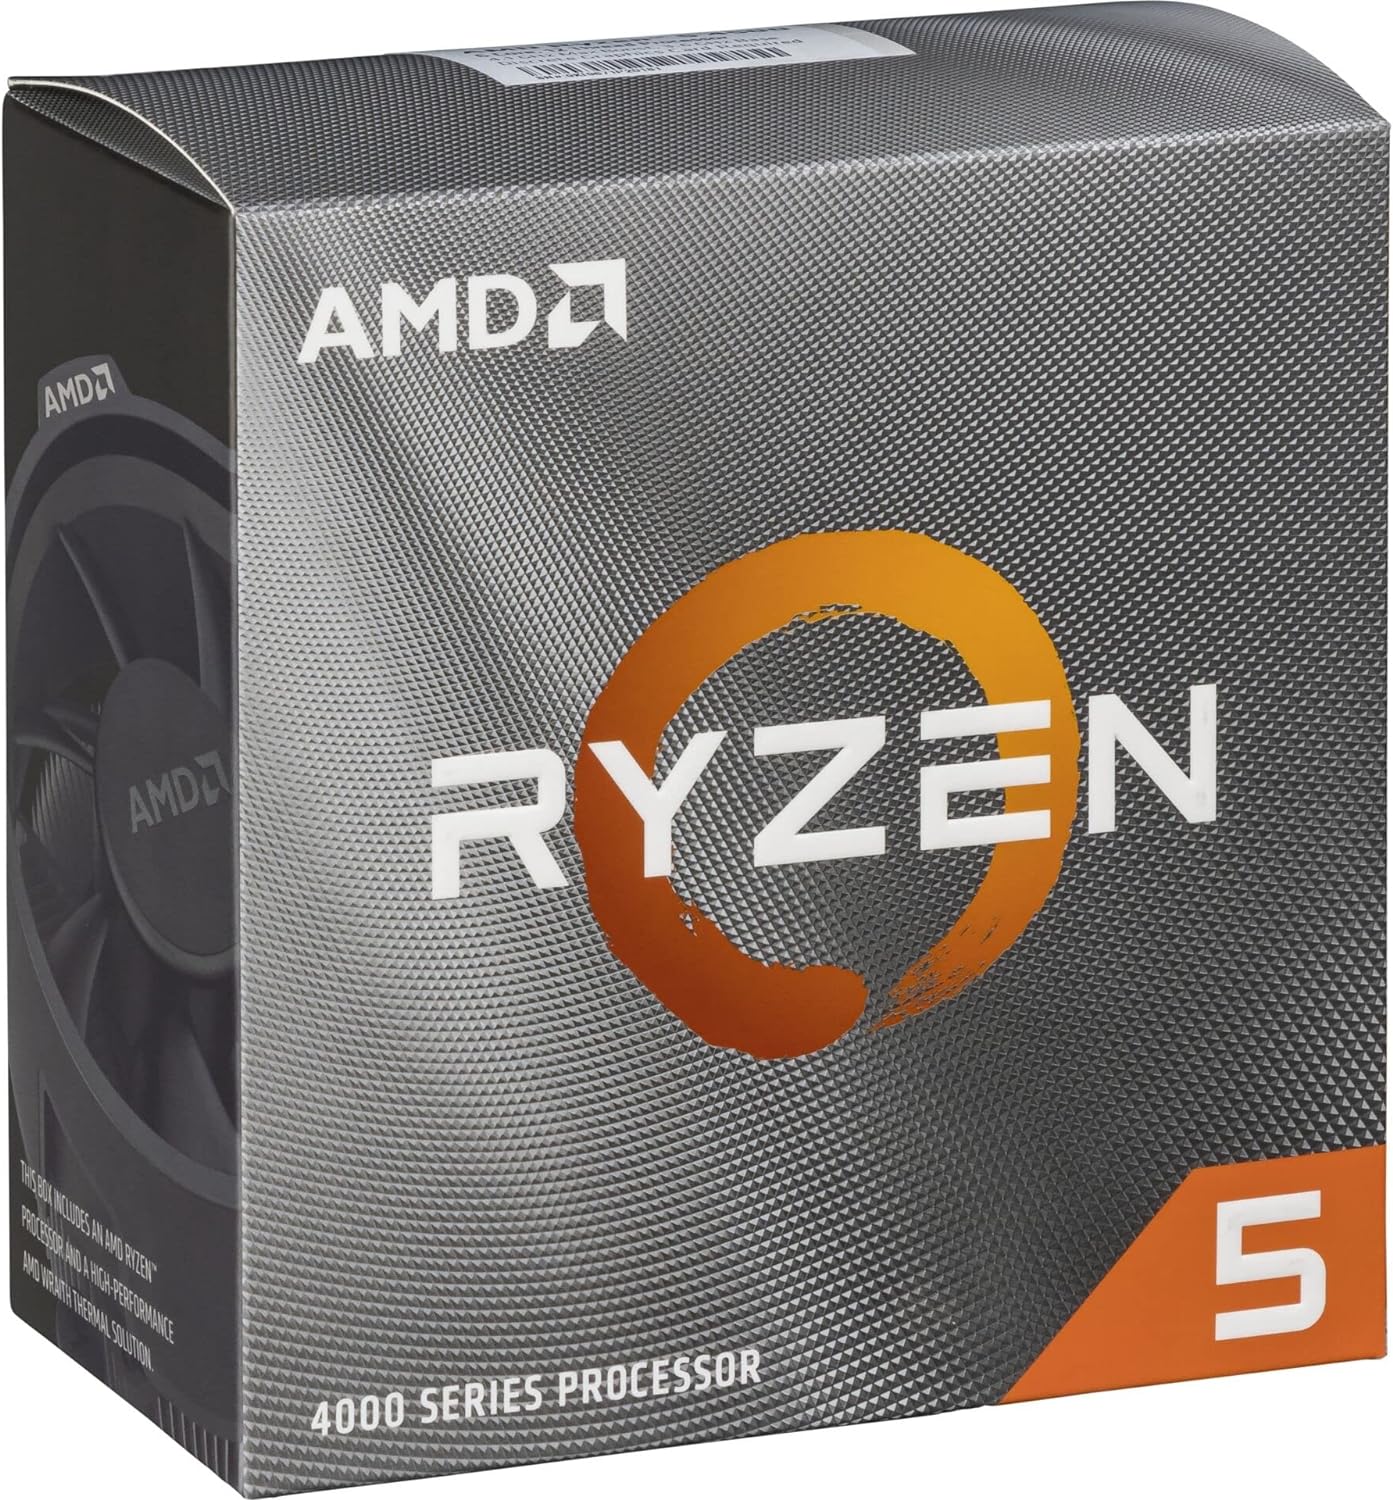 AMD Ryzen 5 4500 Desktop Processor - 6 core/12 thread, up to 4.1 GHz boost, black 0730143314114